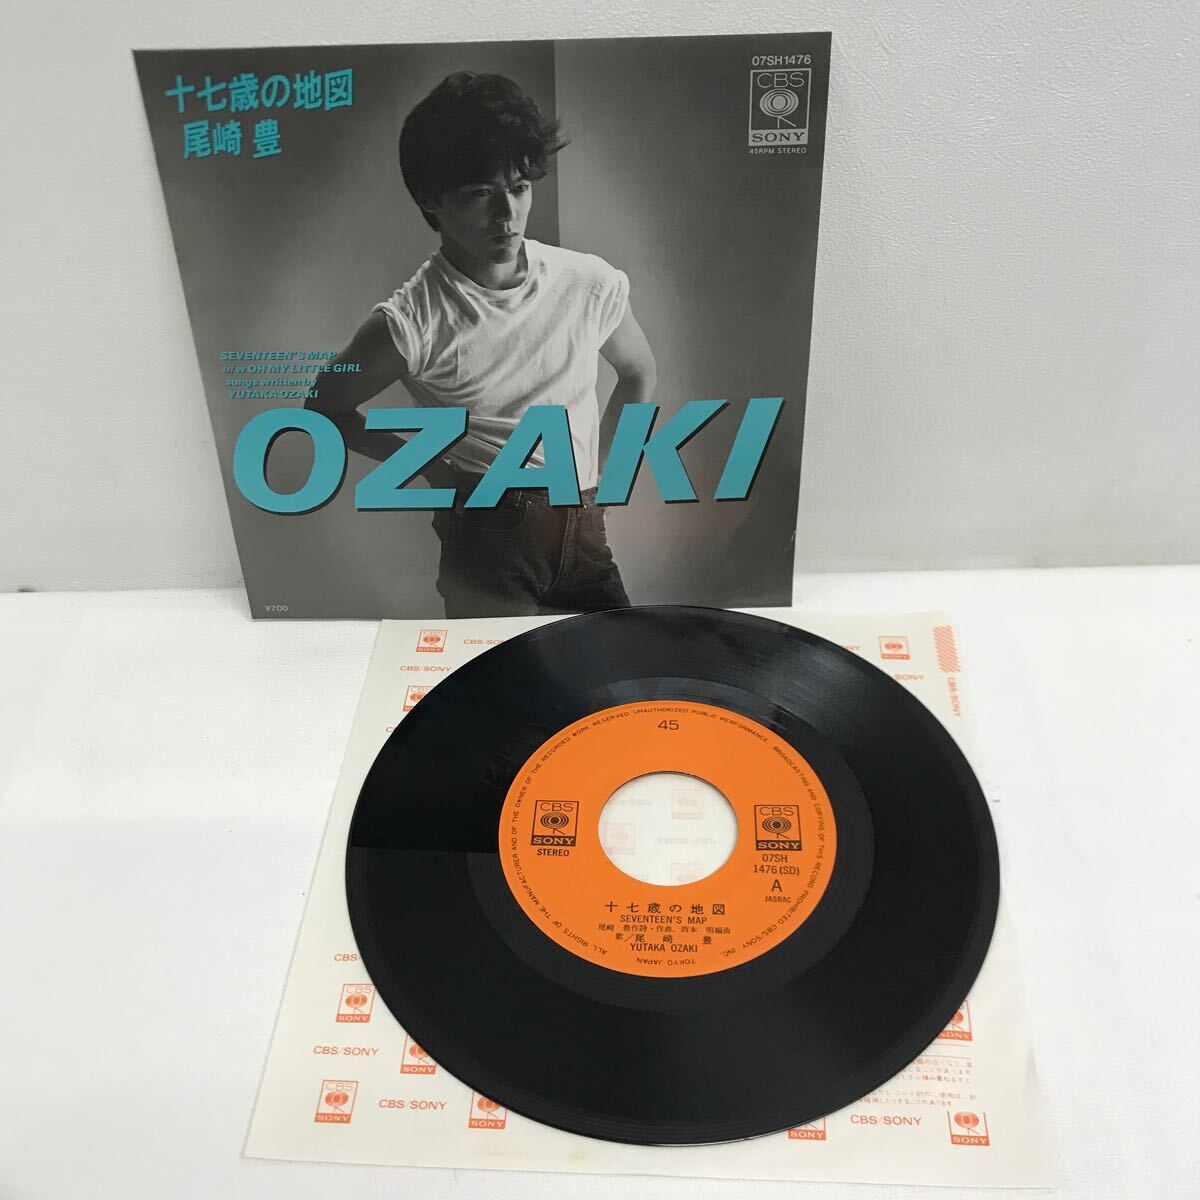 I0508A3 Ozaki Yutaka 10 7 лет. карта / OH MY LITTLE GIRL EP запись музыка Японская музыка 07SH1476 CBS SONY Sony записано в Японии 